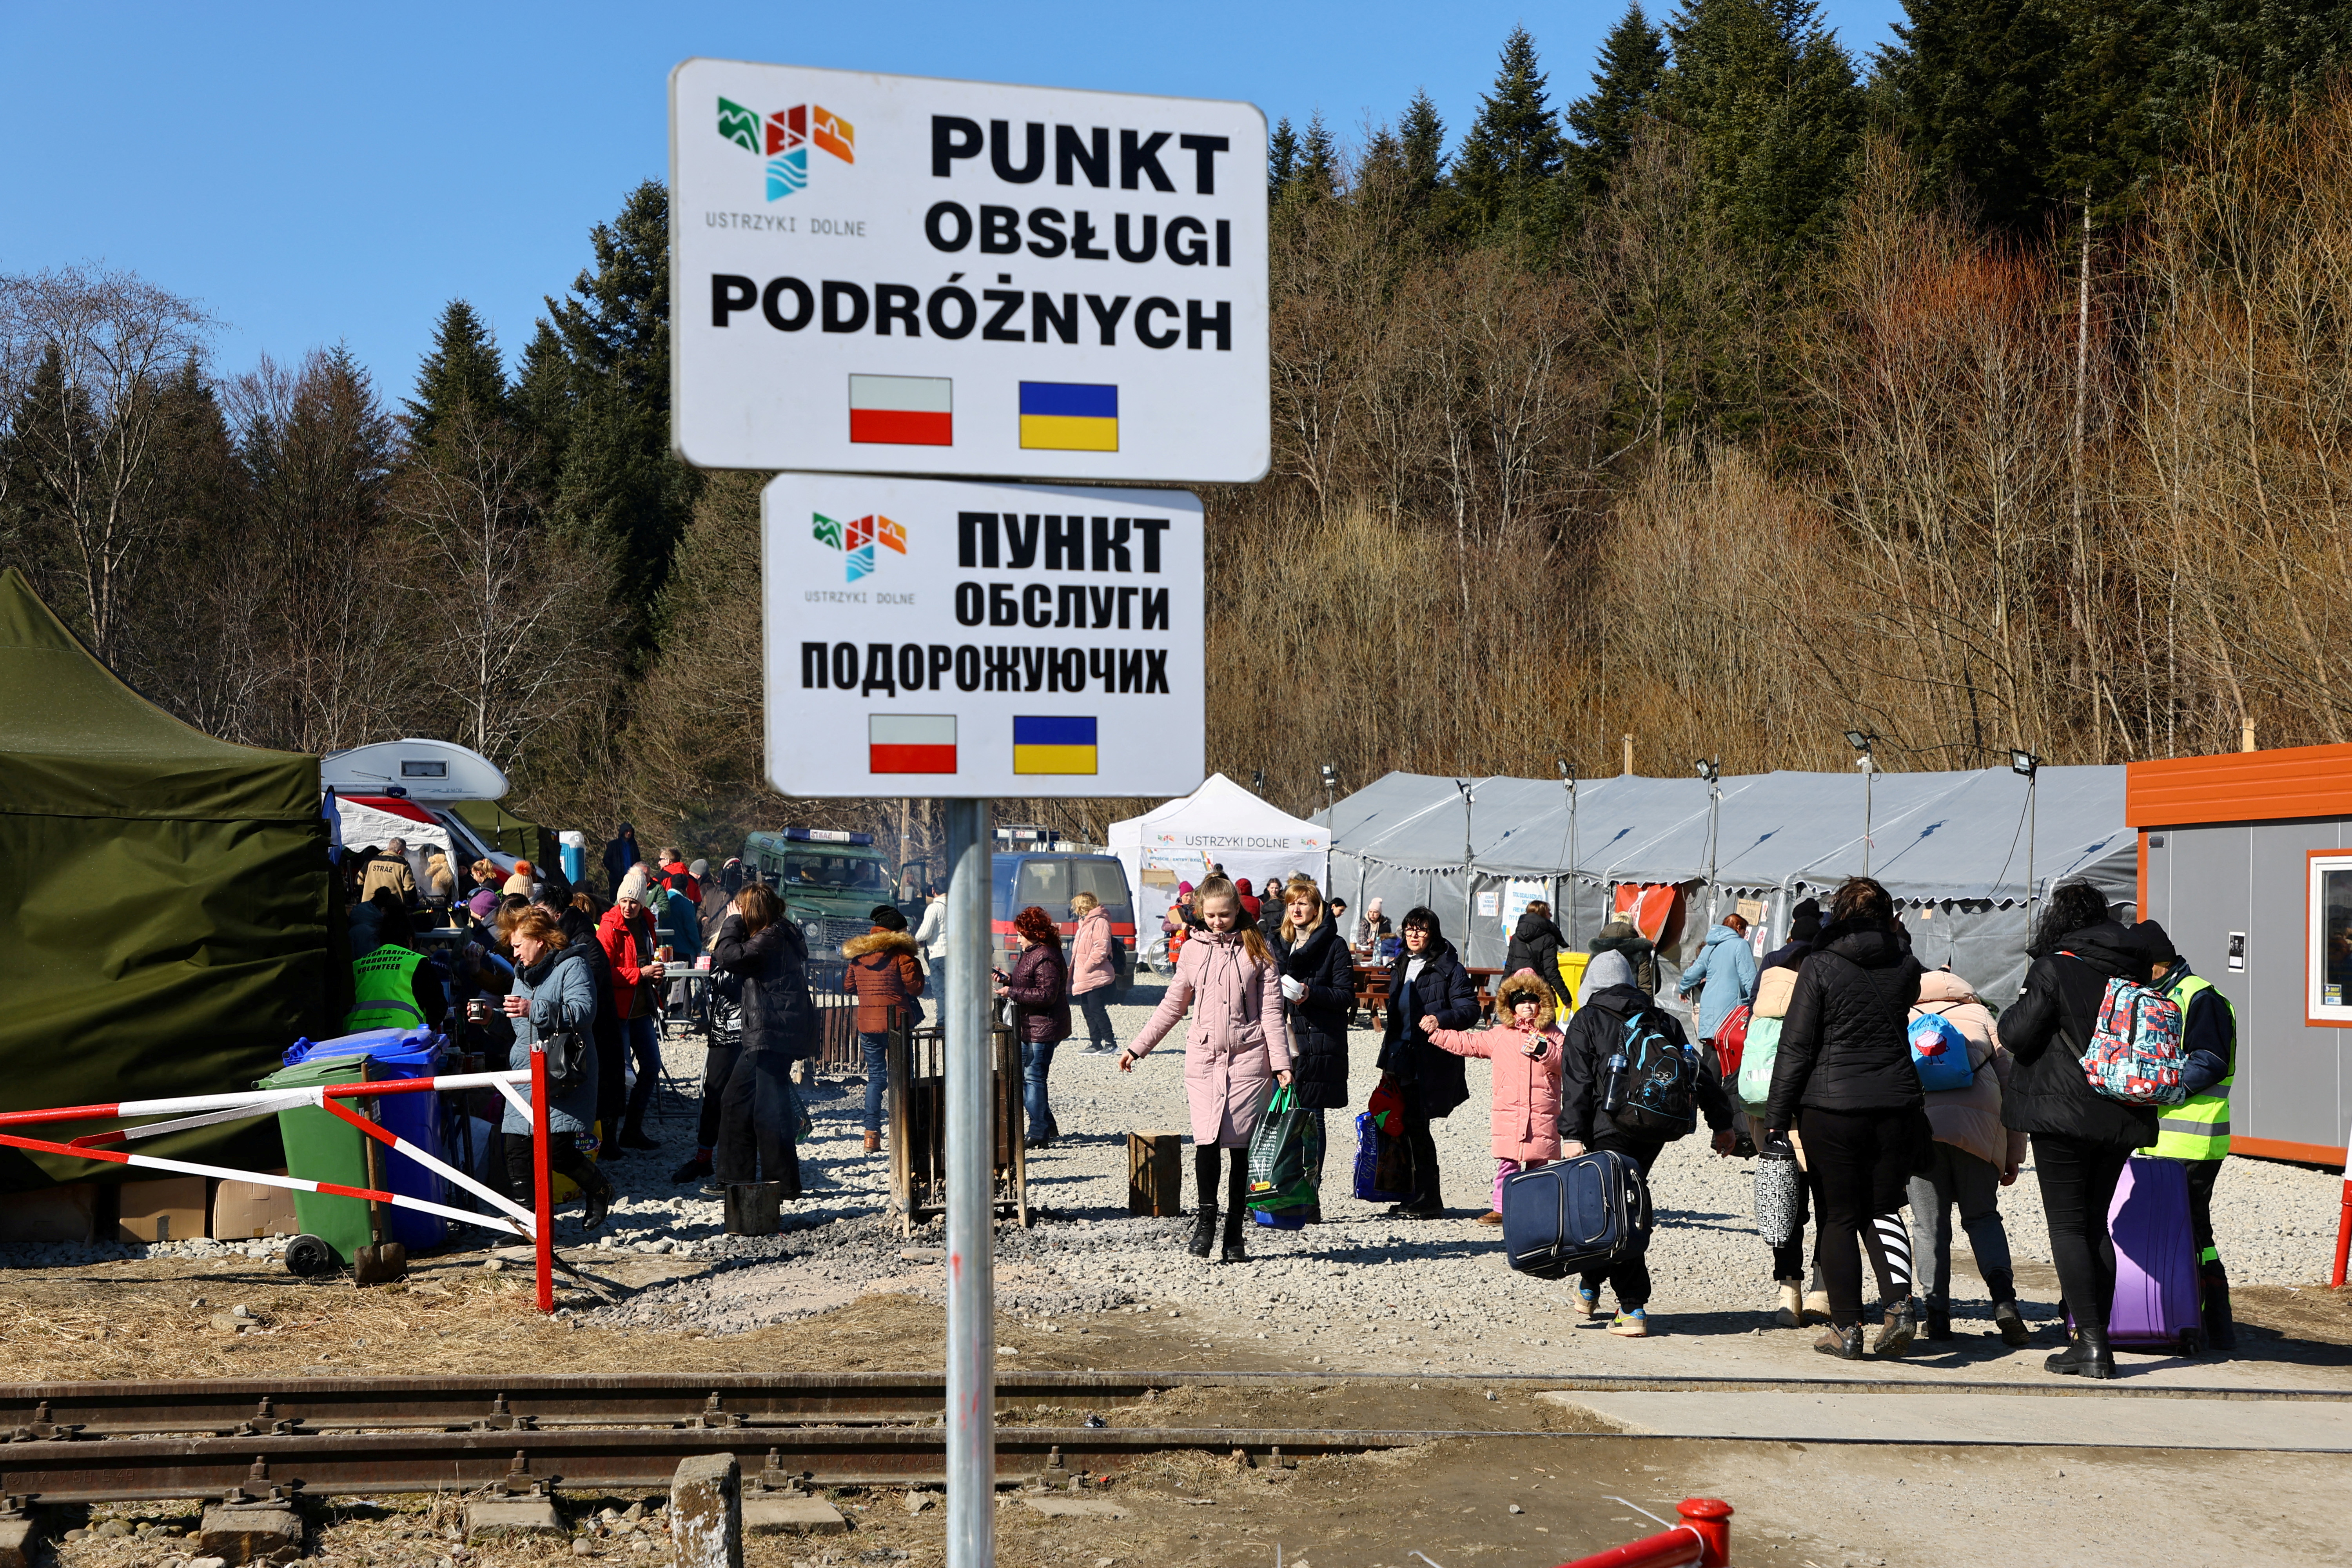 People fleeing Russia's invasion of Ukraine arrive at a border checkpoint in Kroscienko